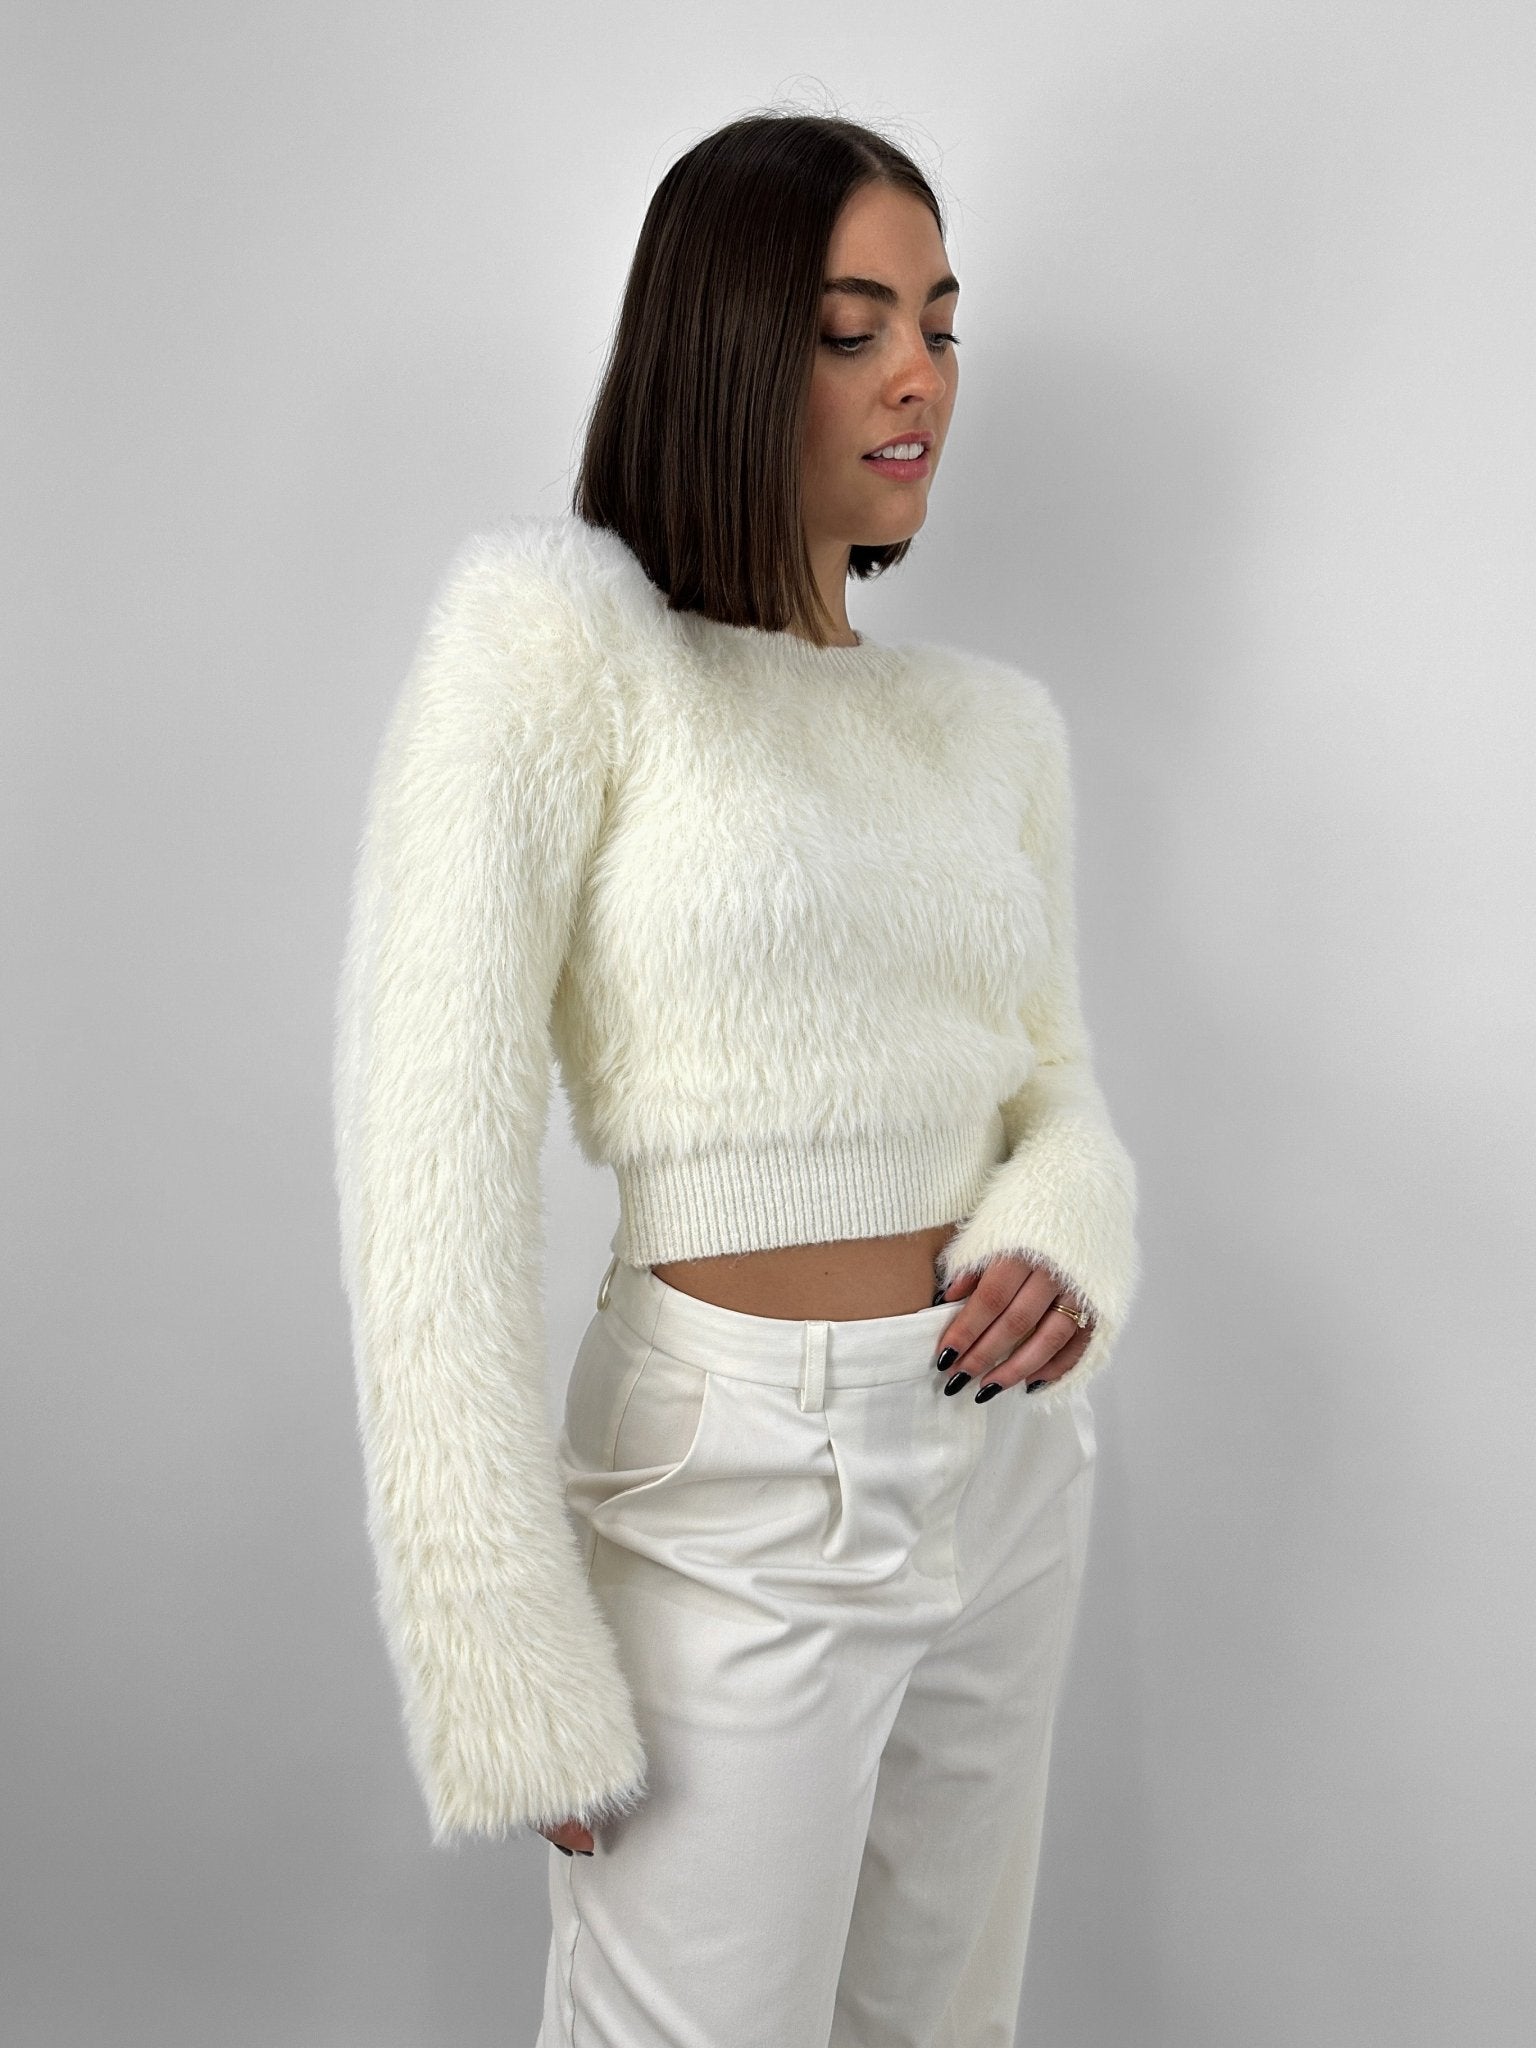 Fuzzy Sweater Halter Cropped Top – Arcade Attire